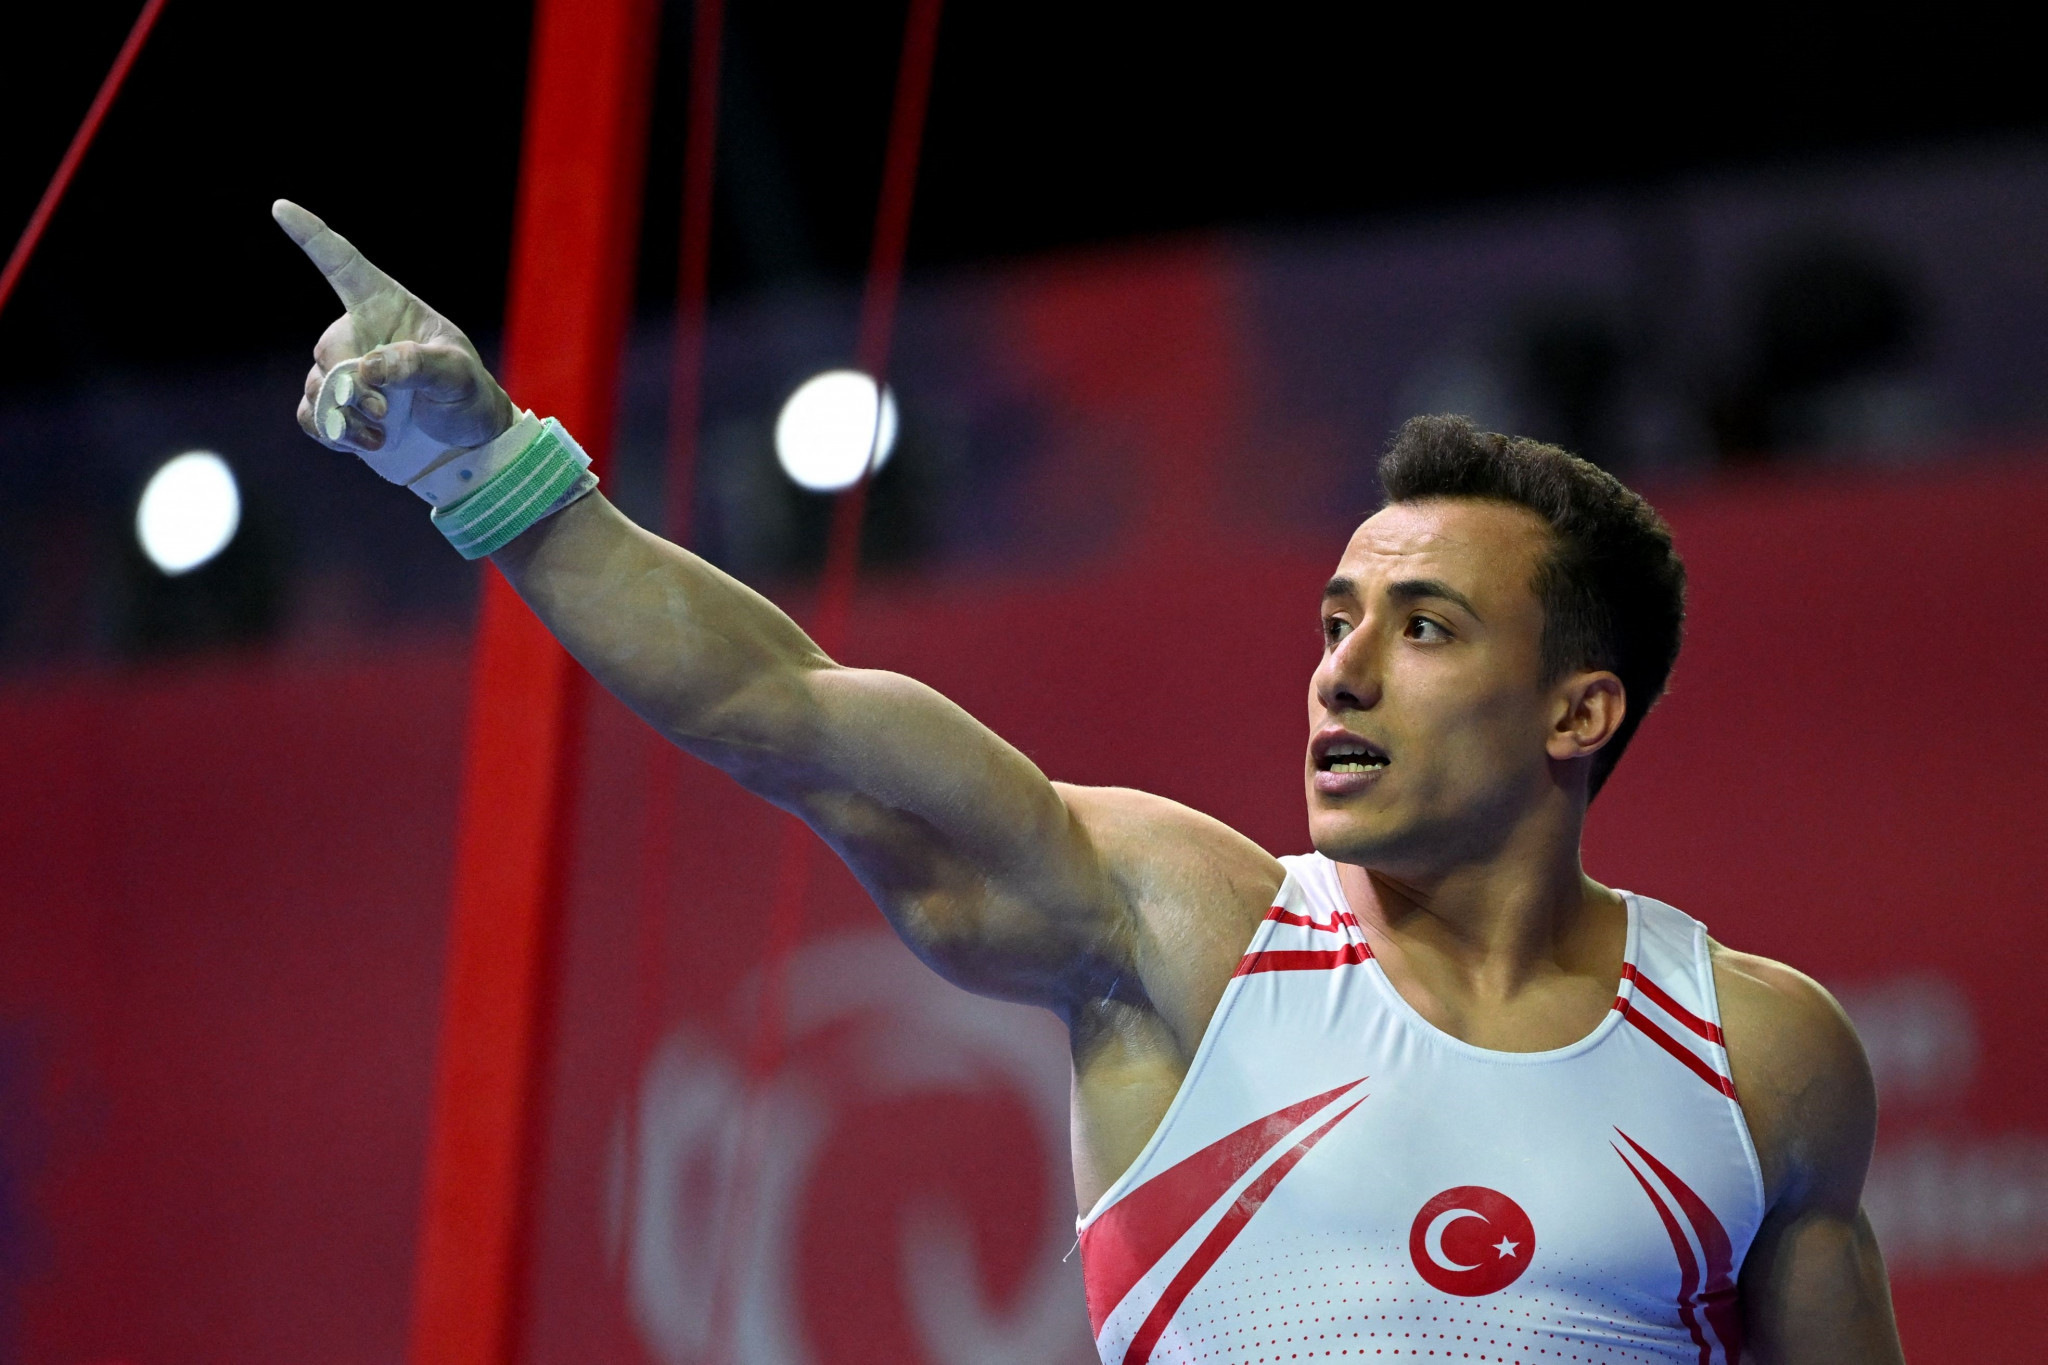 Home star Asil strikes gold again at European Artistic Gymnastics Championships